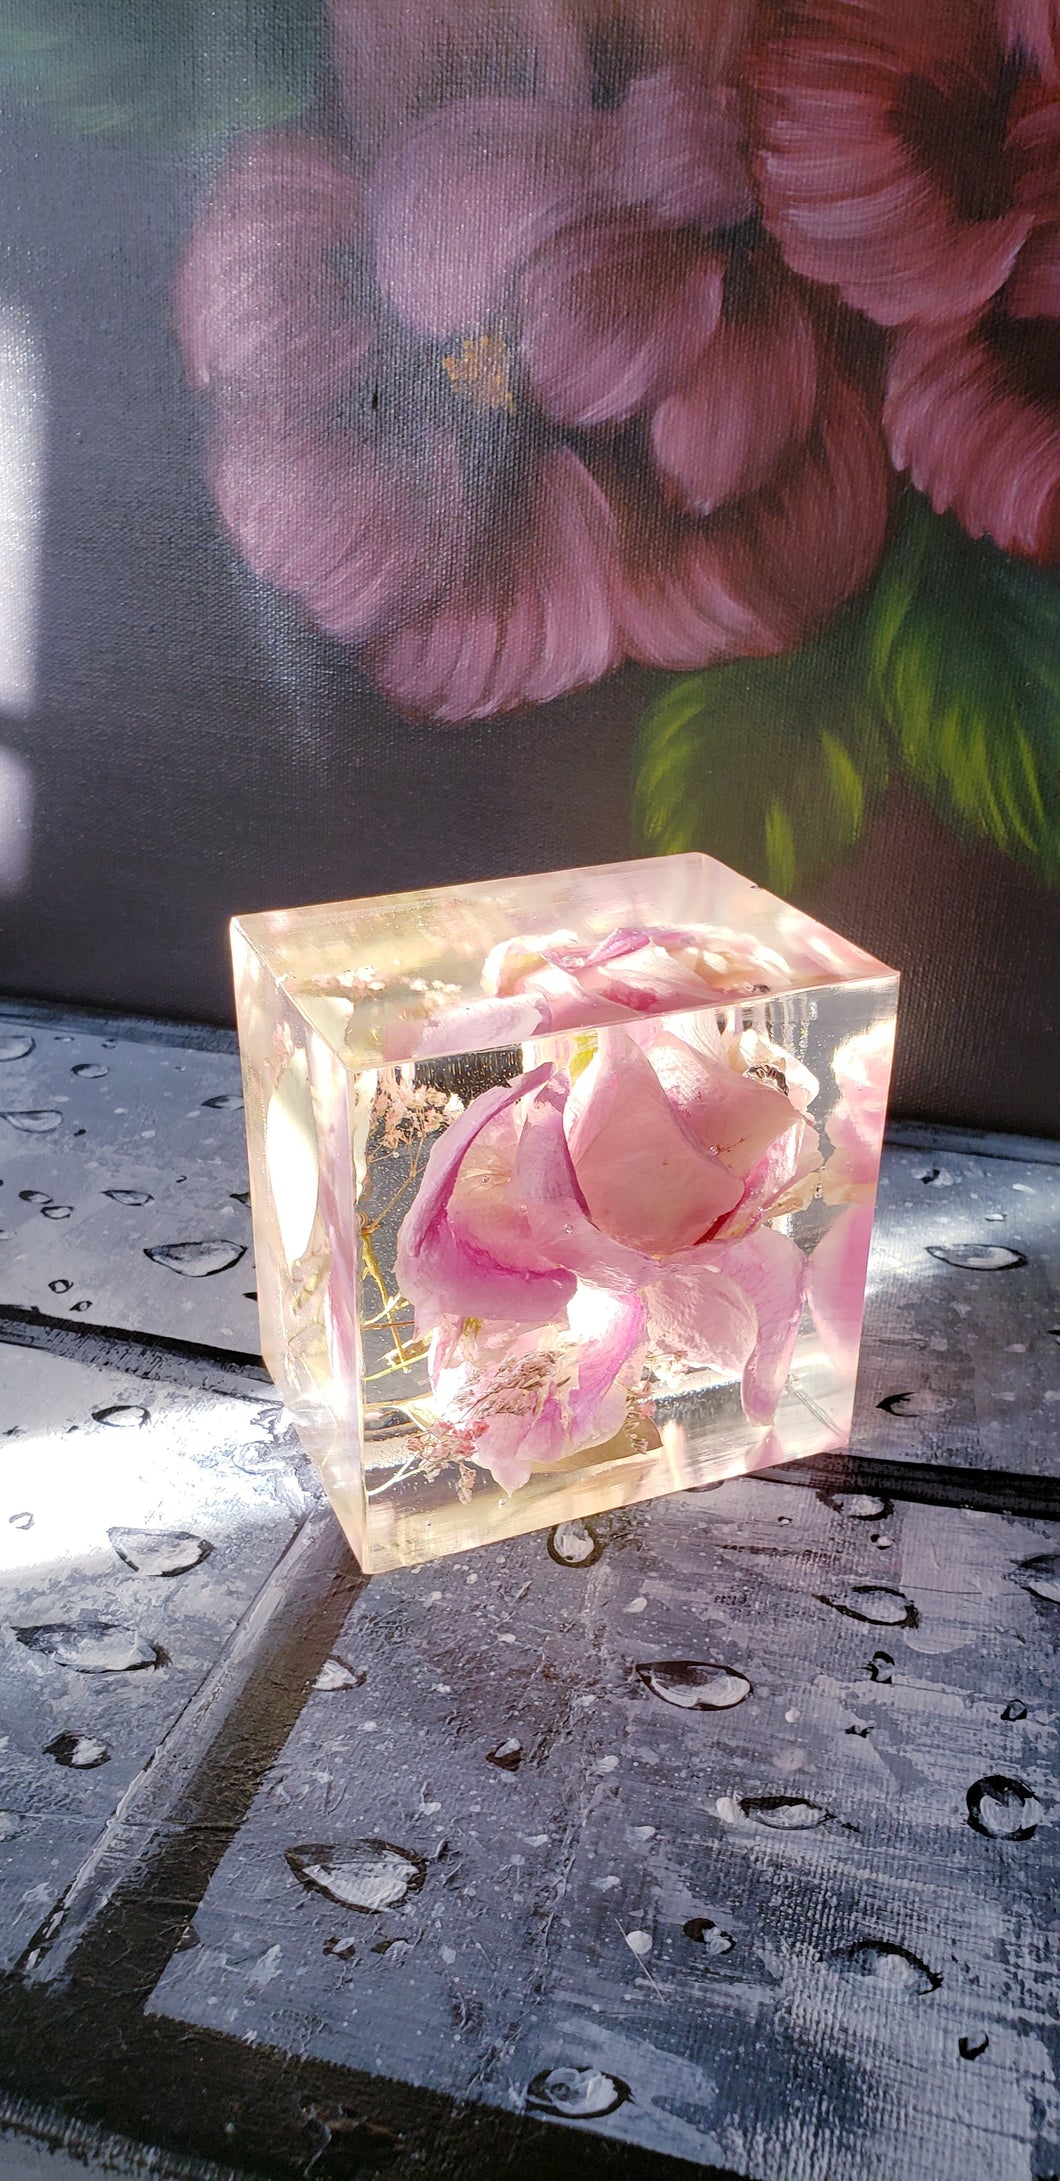 Preserving wedding Flowers in Large Resin Cube like glass Paperweight Keepsake Sweet romantic memories of your wedding, anniversary,funeral.